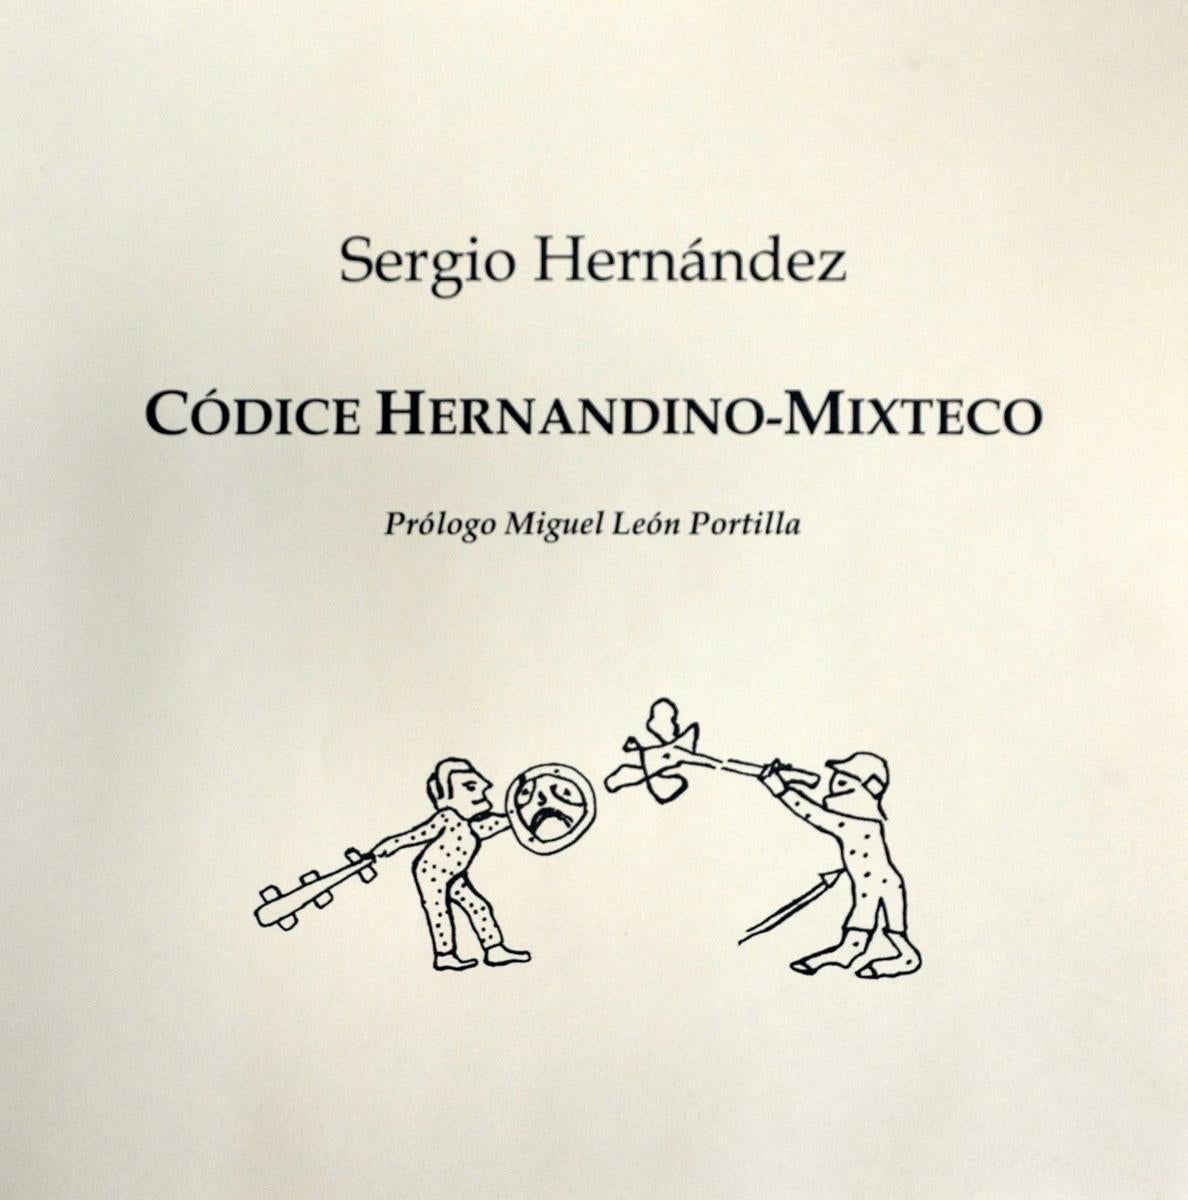 Sergio Hernández, 'Códice Hernandino-Mixteco', 2018, Silkscreen, 15.7x15.7in 1